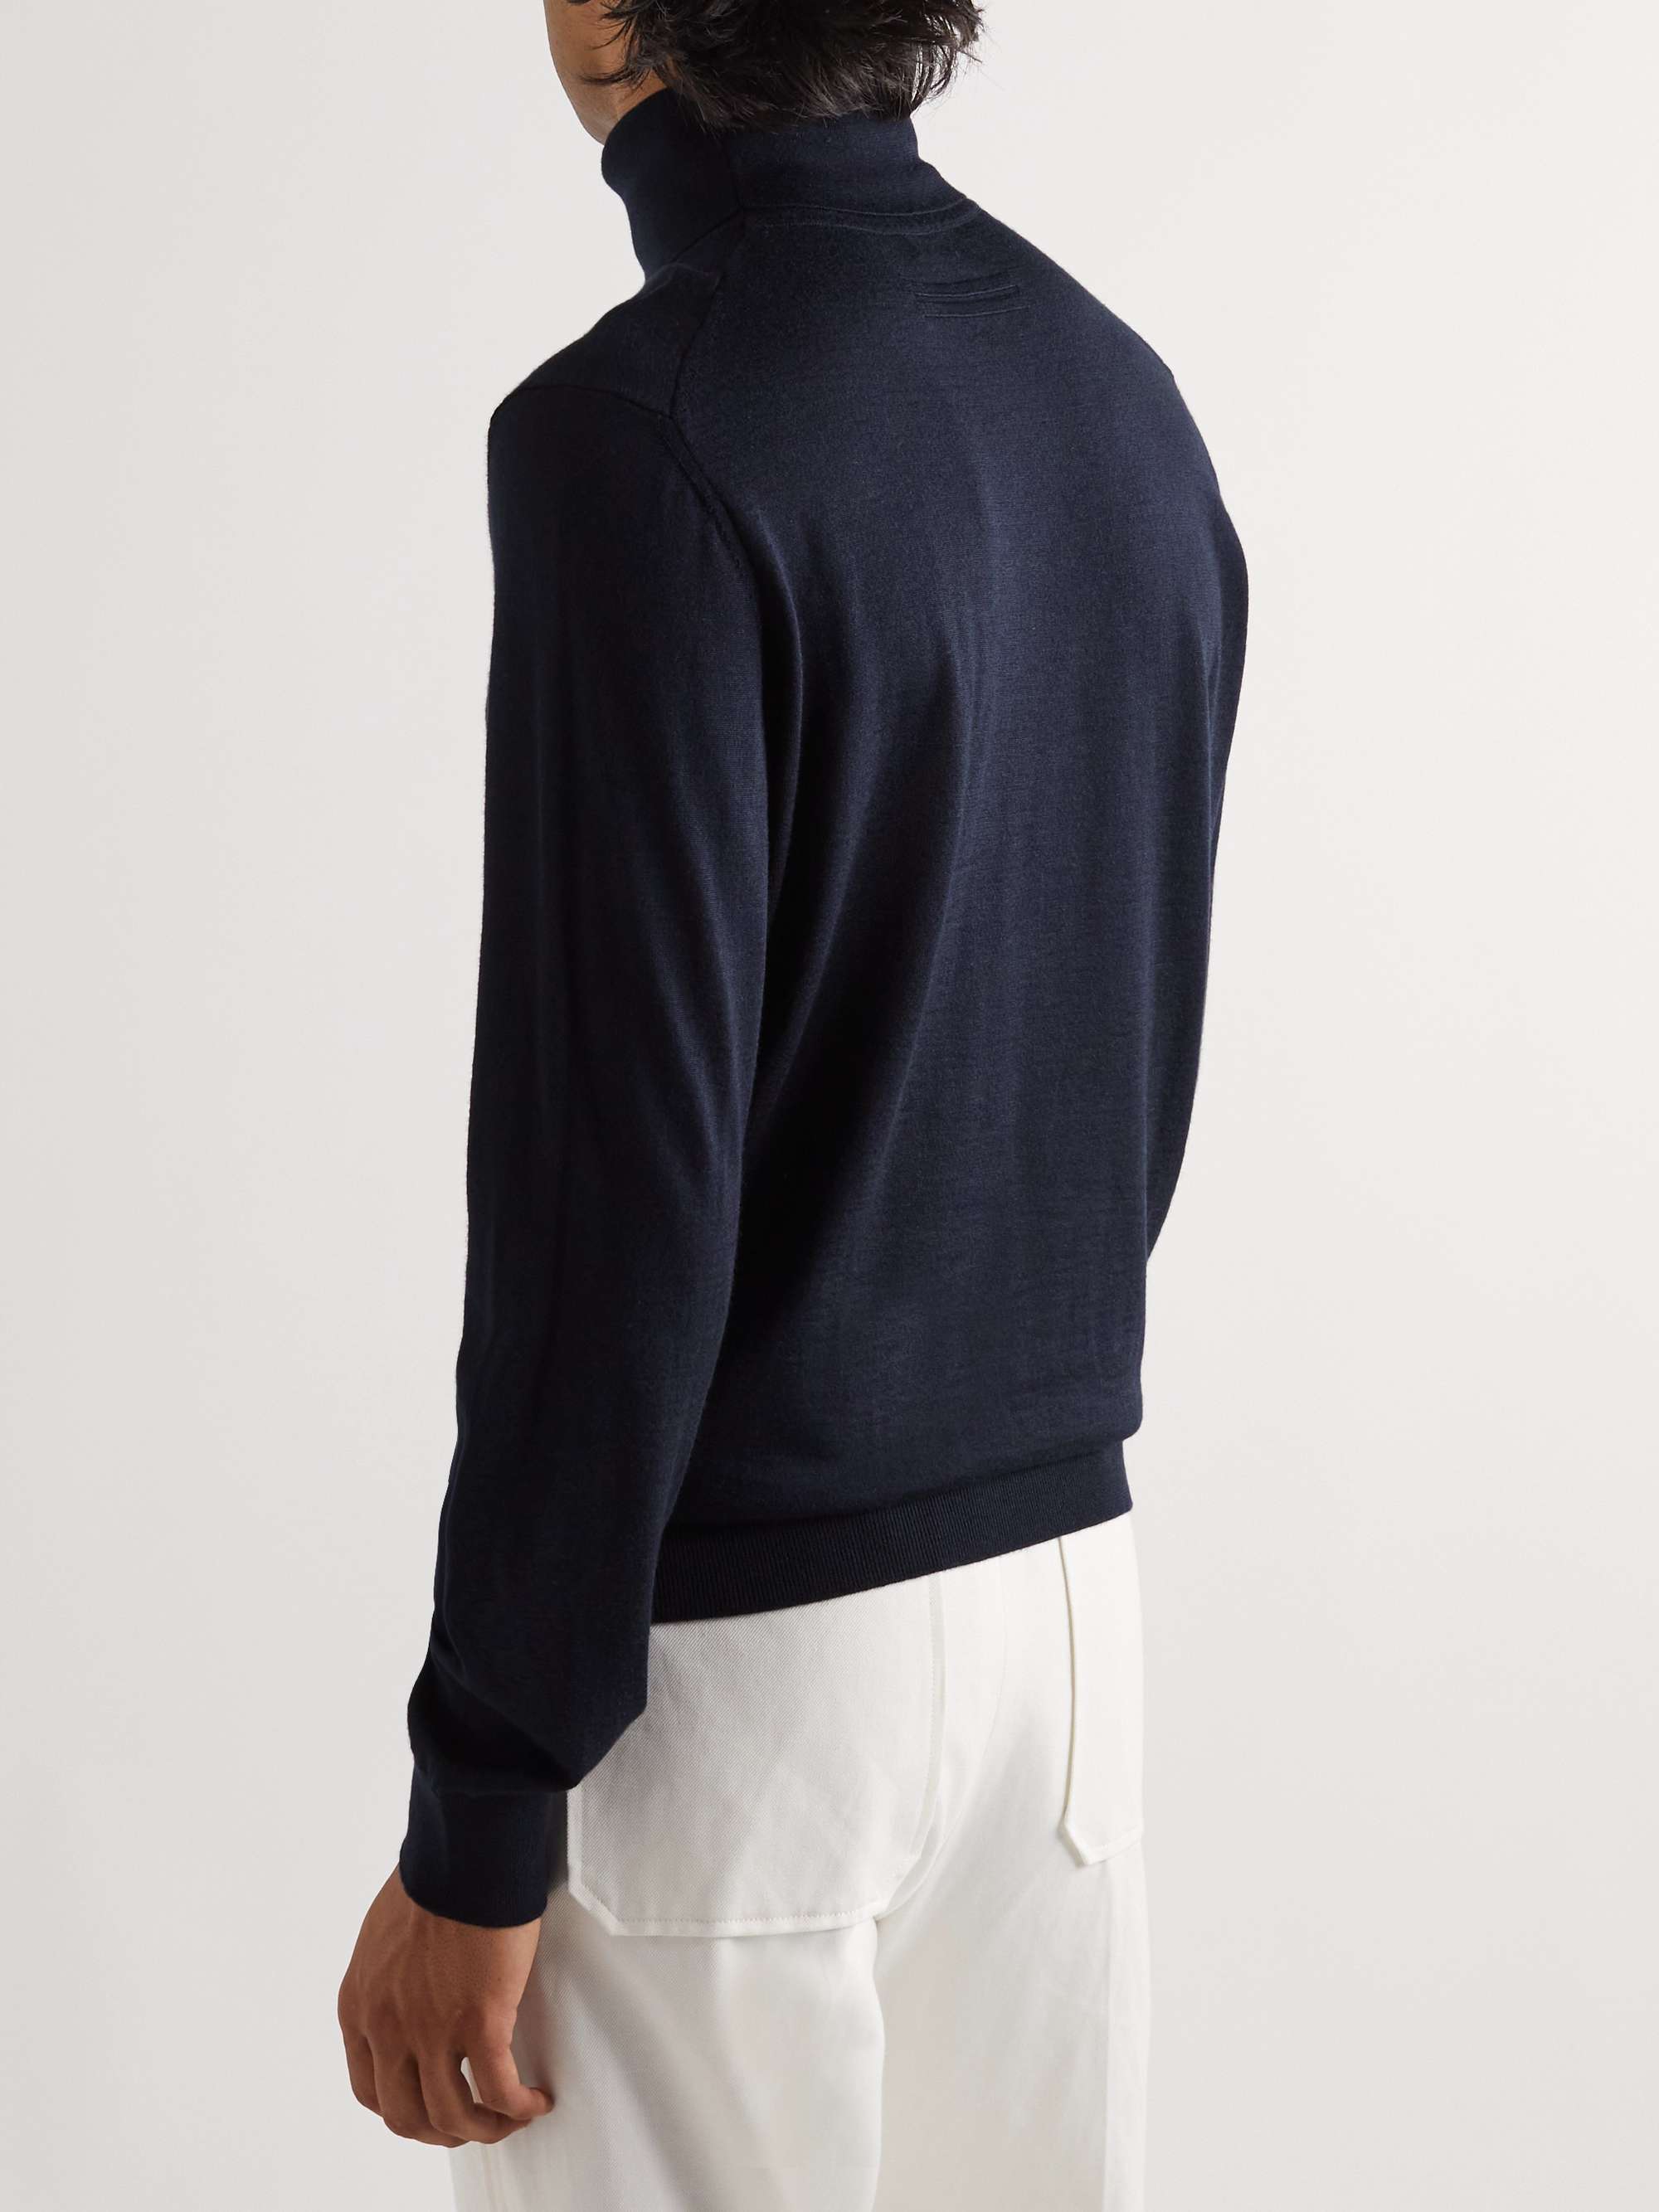 ZEGNA Cashmere and Silk-Blend Turtleneck Sweater